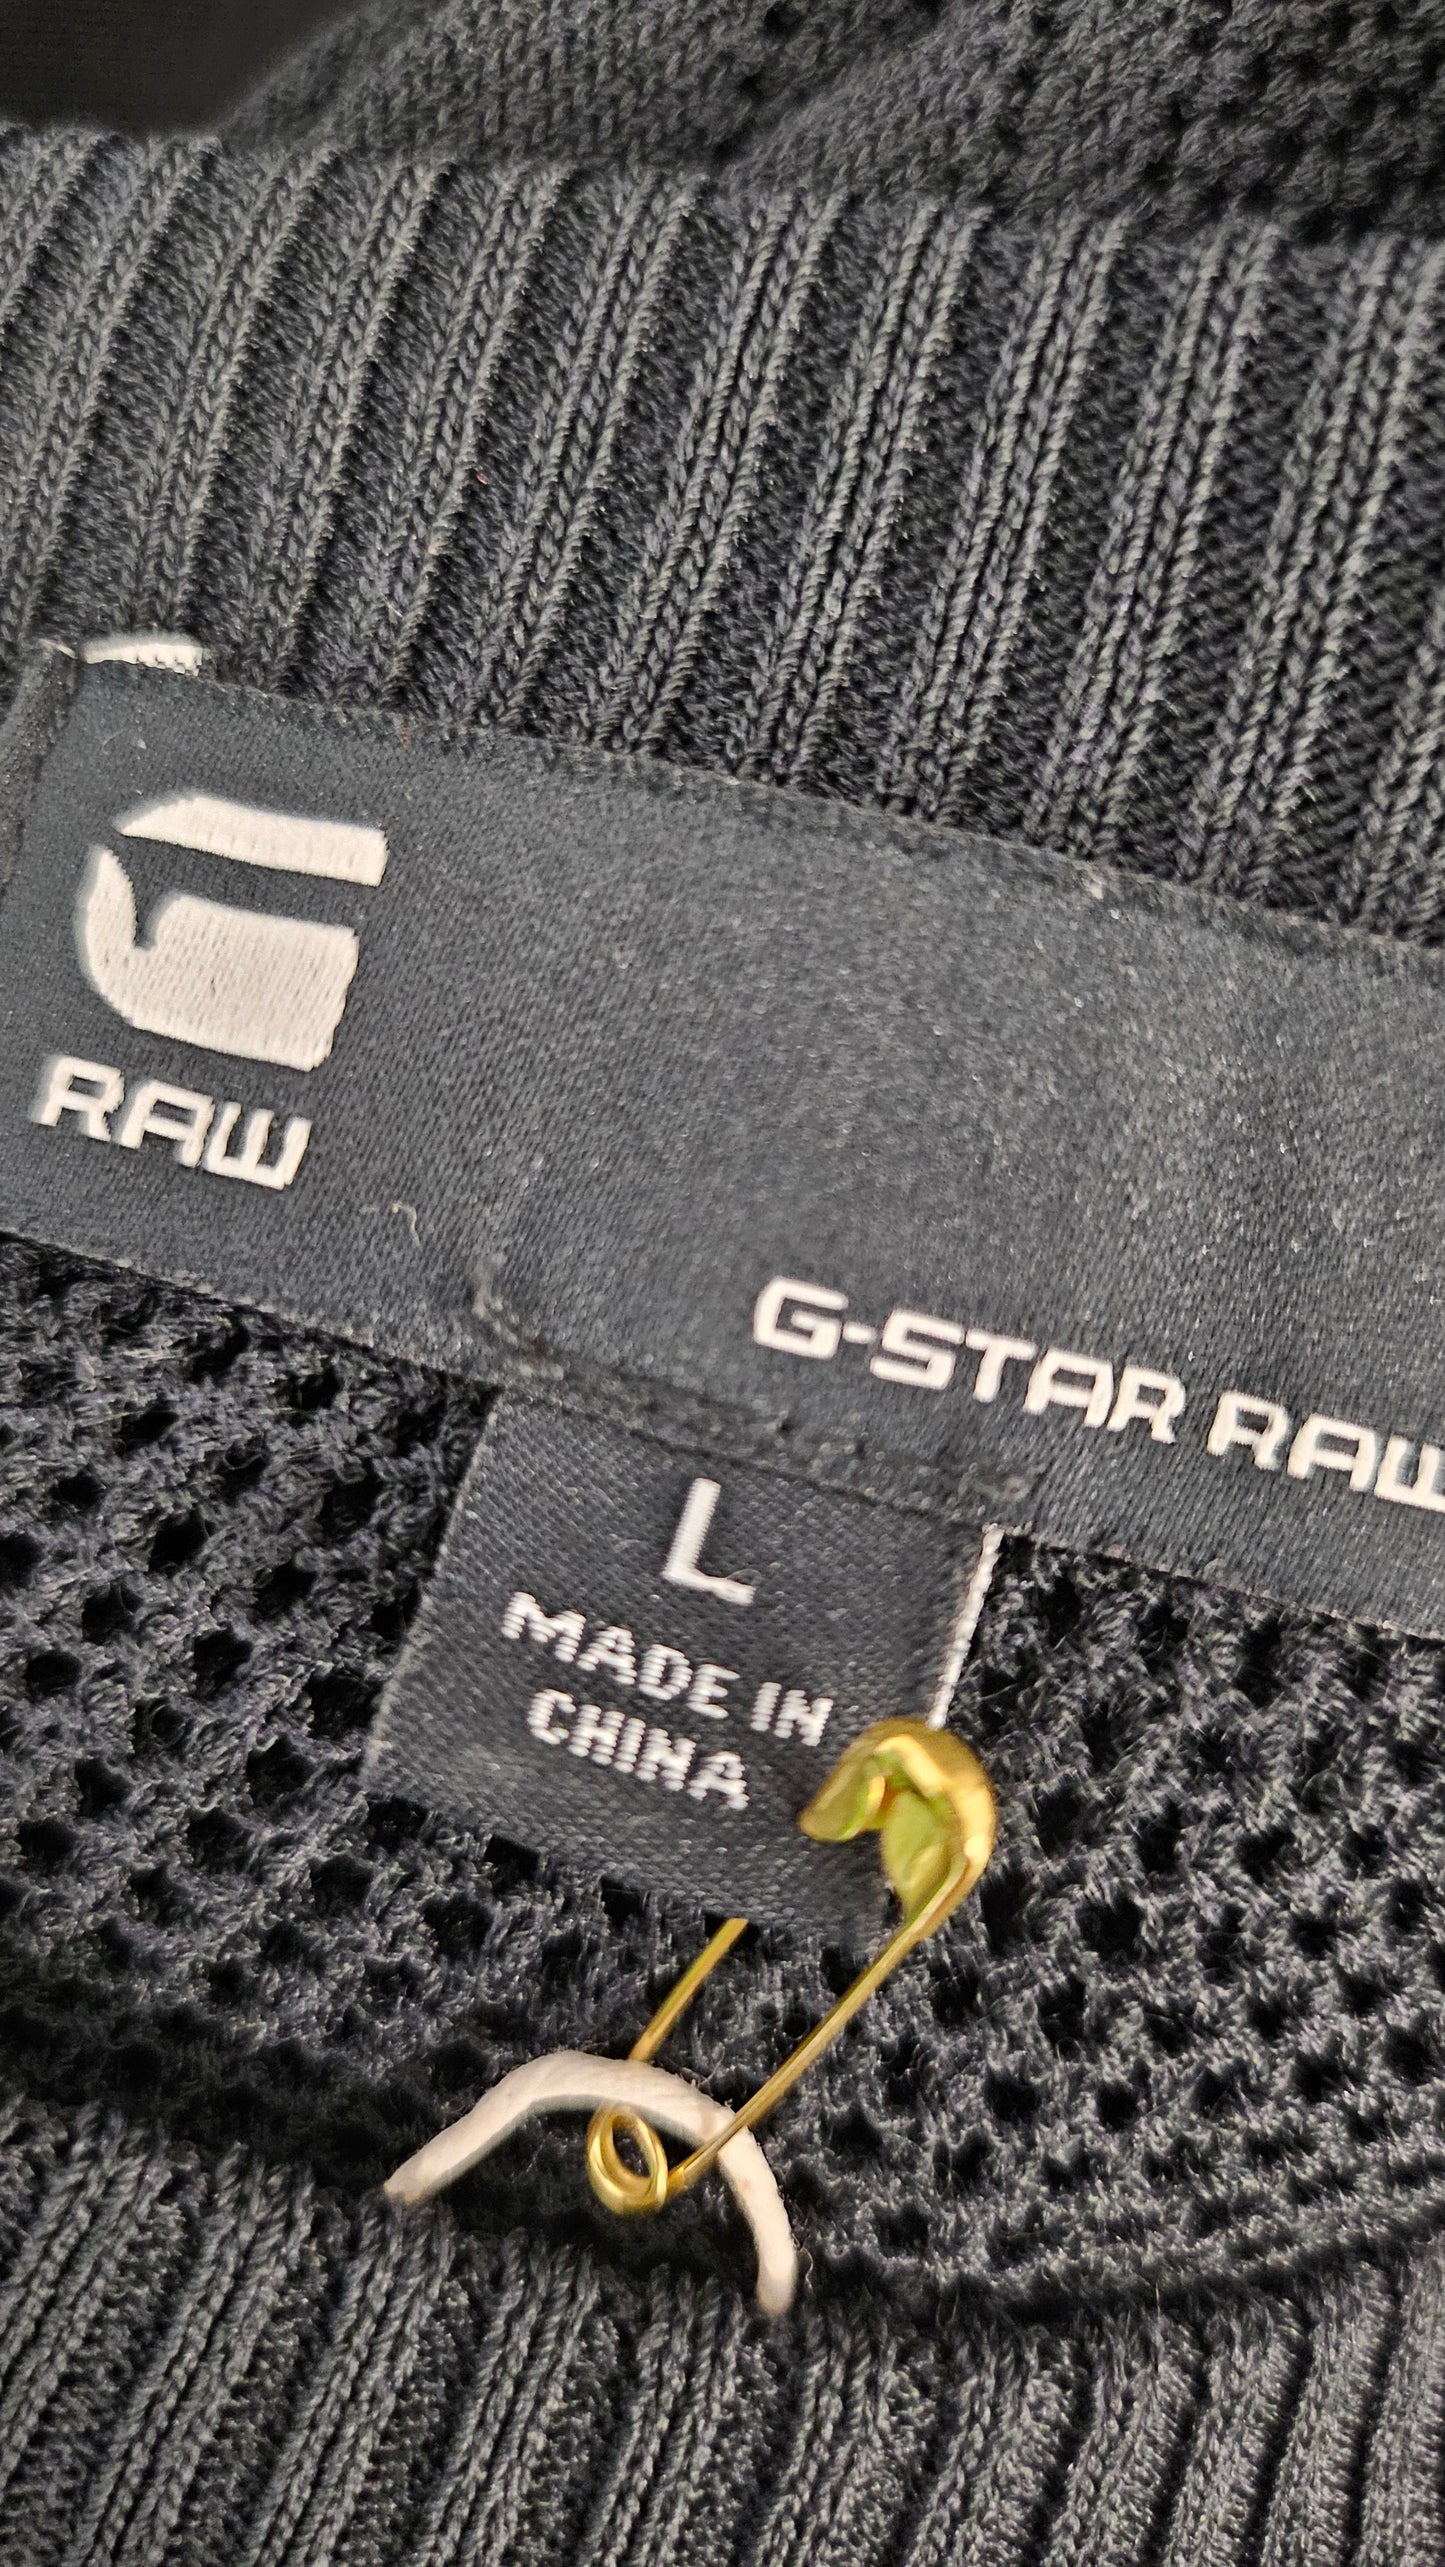 G-Star Raw Mesh Knit Black Tops (14)